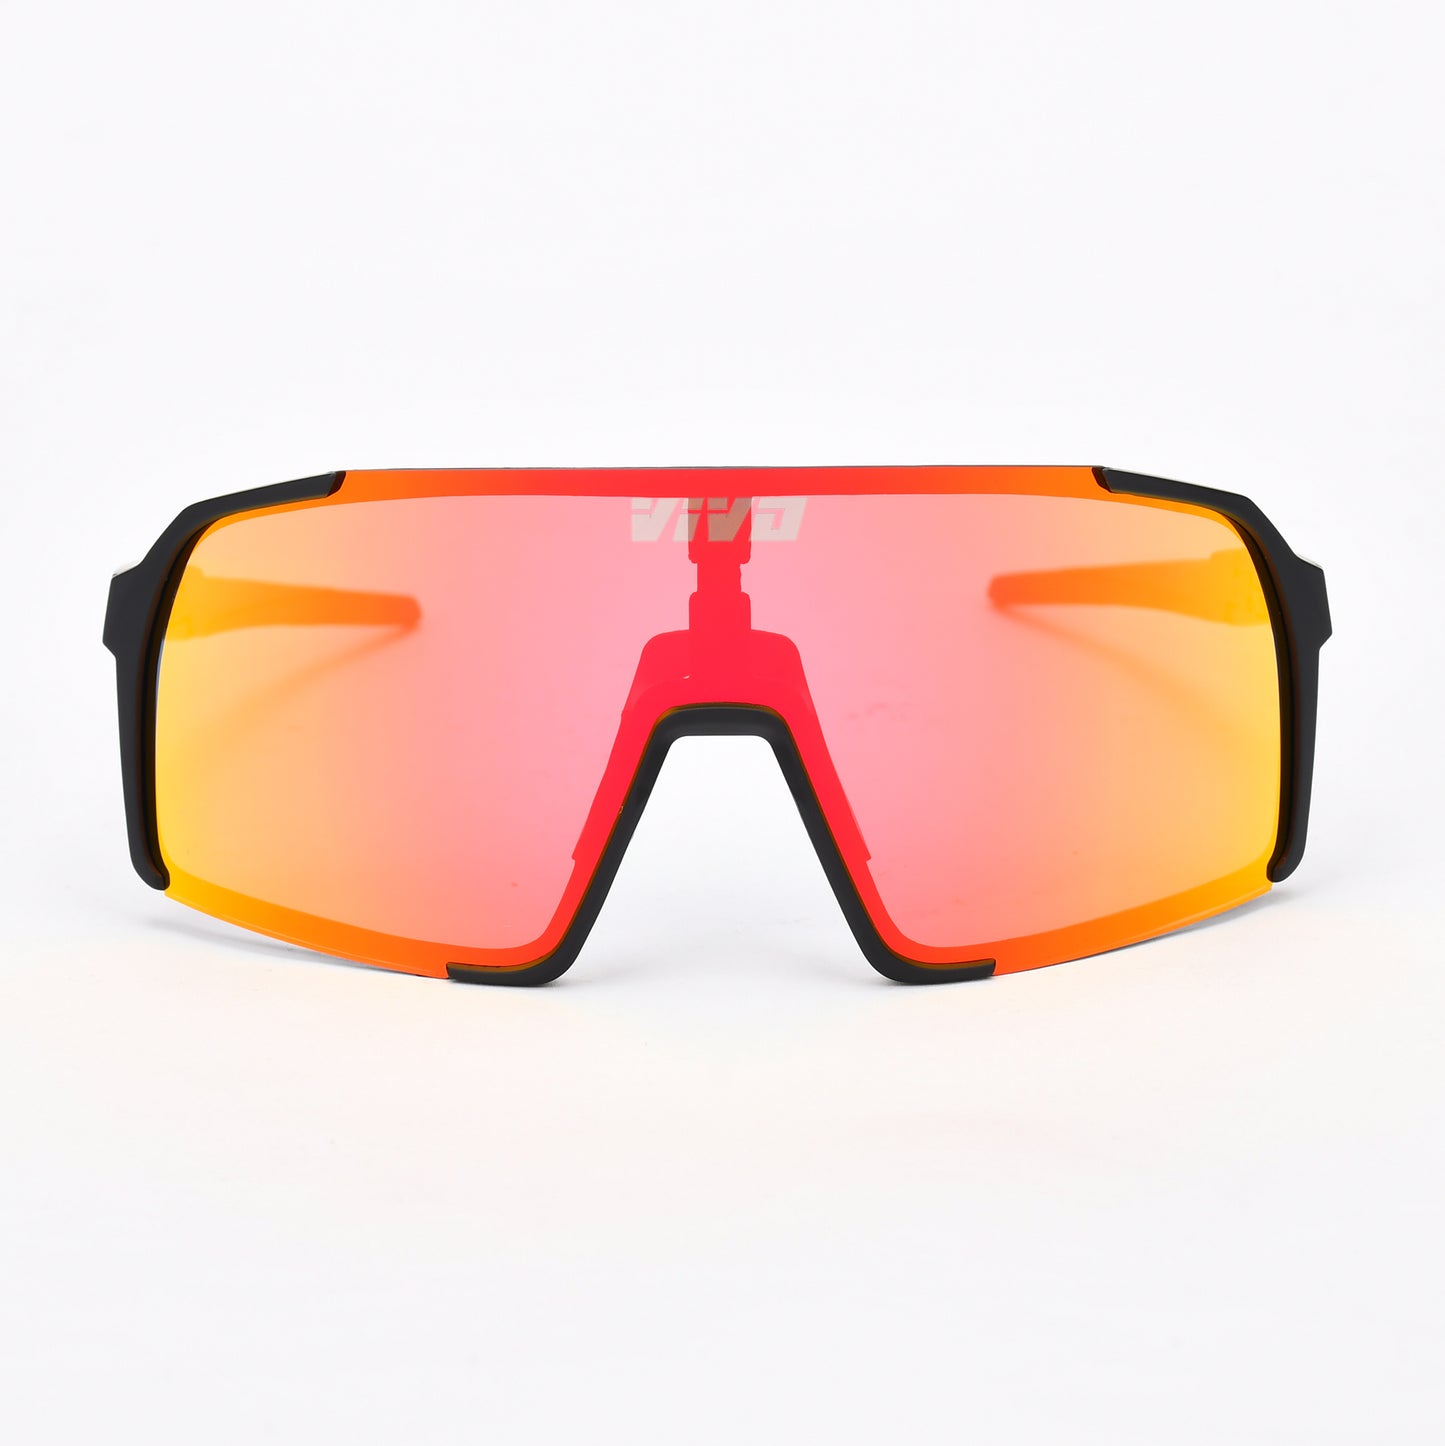 Off-road sport sunglasses